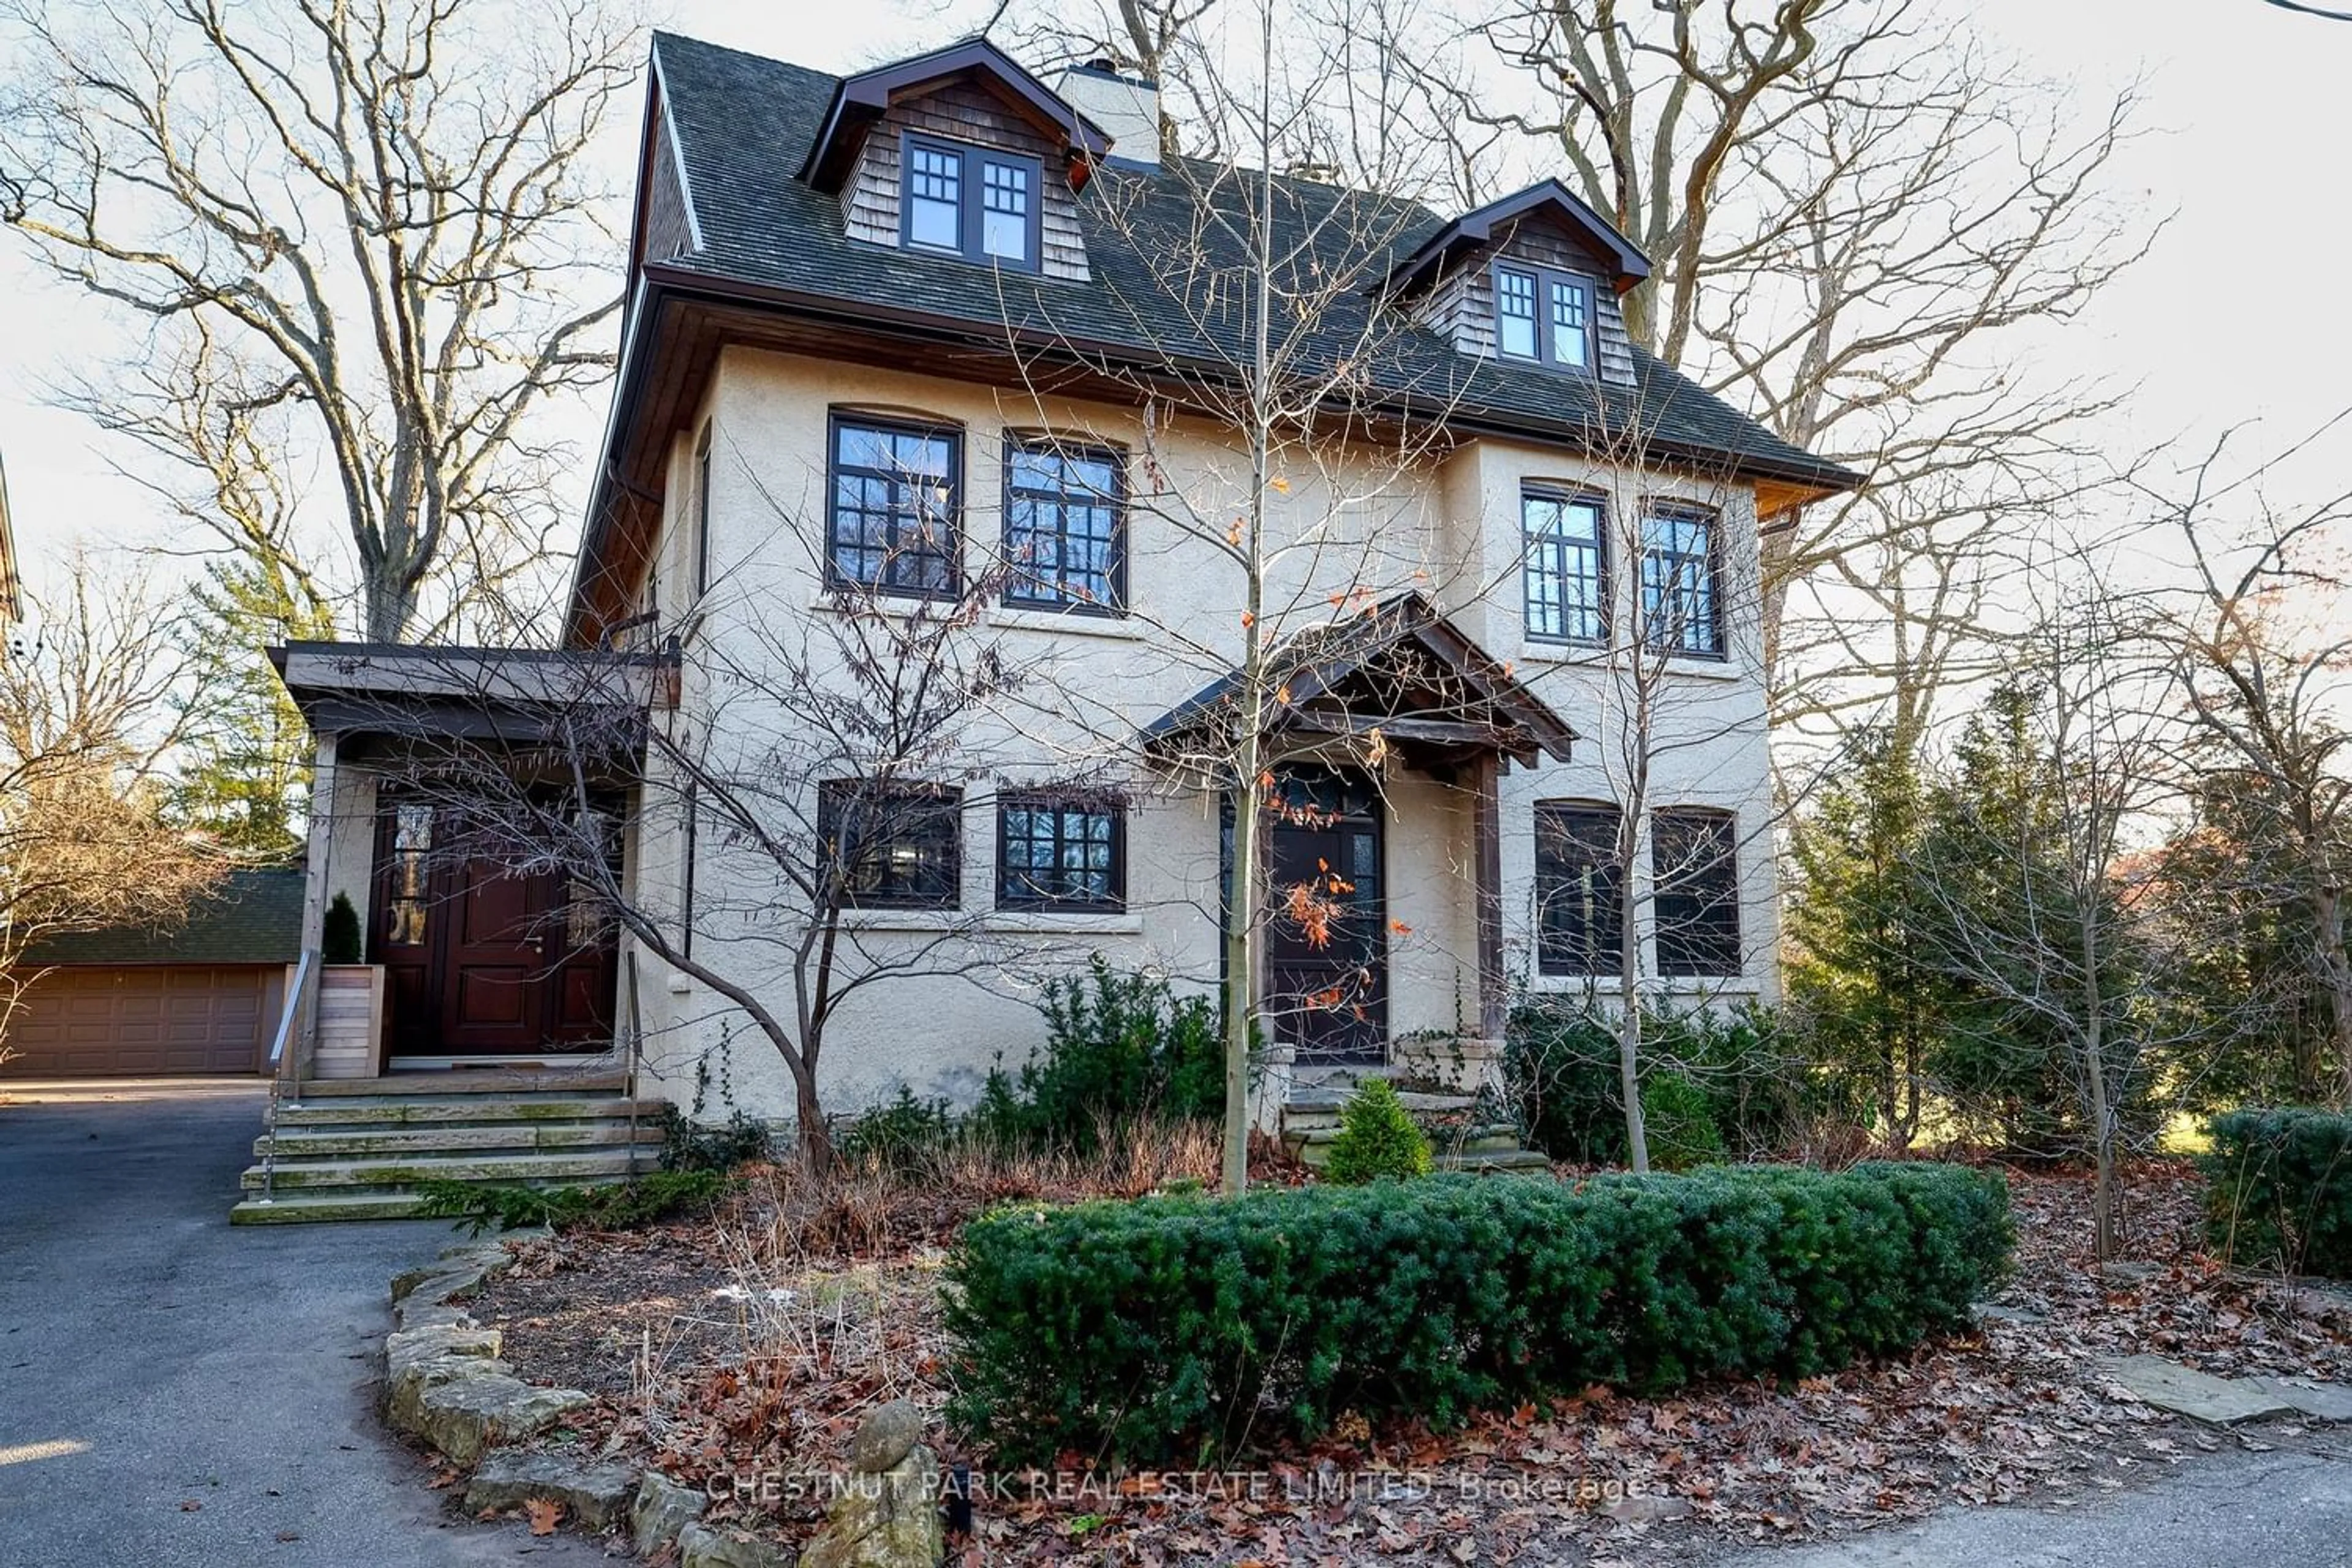 Home with stone exterior material for 17 Wychwood Park, Toronto Ontario M6G 2V5